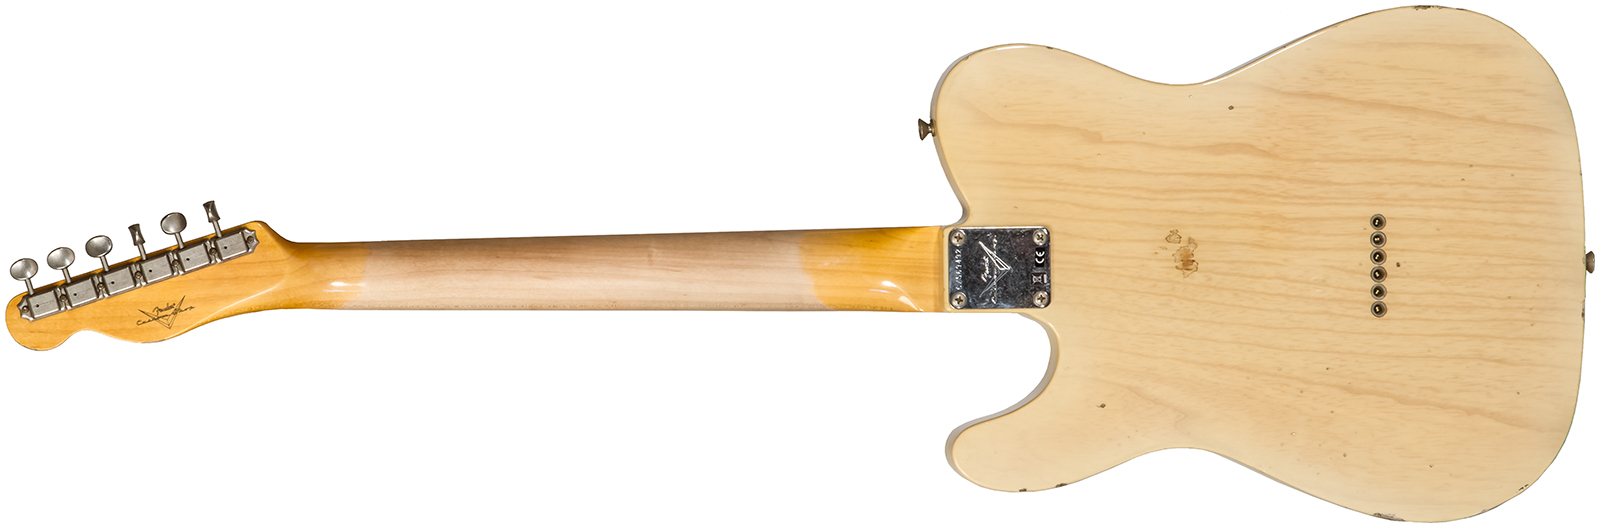 Fender Custom Shop Tele 1960 2s Ht Rw #cz569492 - Relic Natural Blonde - Televorm elektrische gitaar - Variation 1